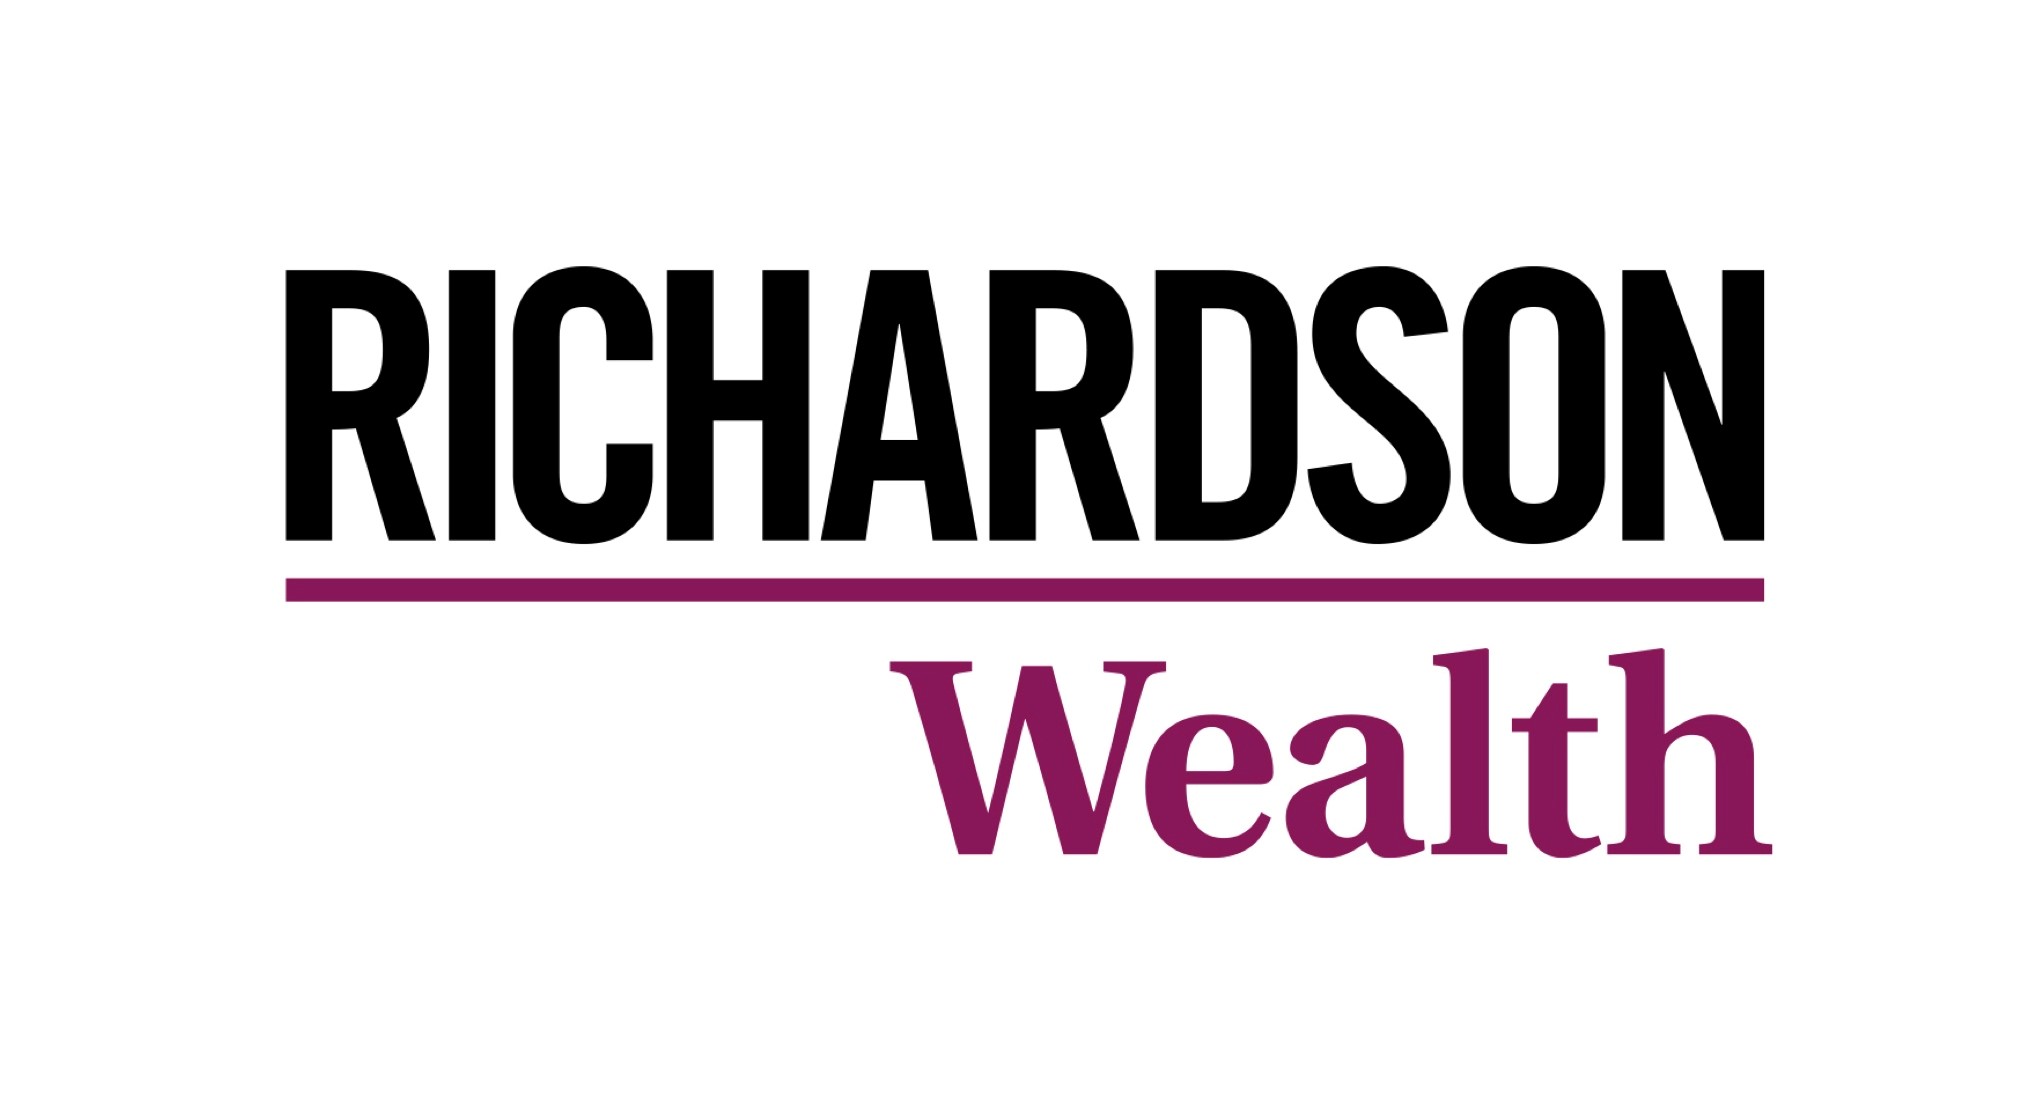 Richardson Wealth